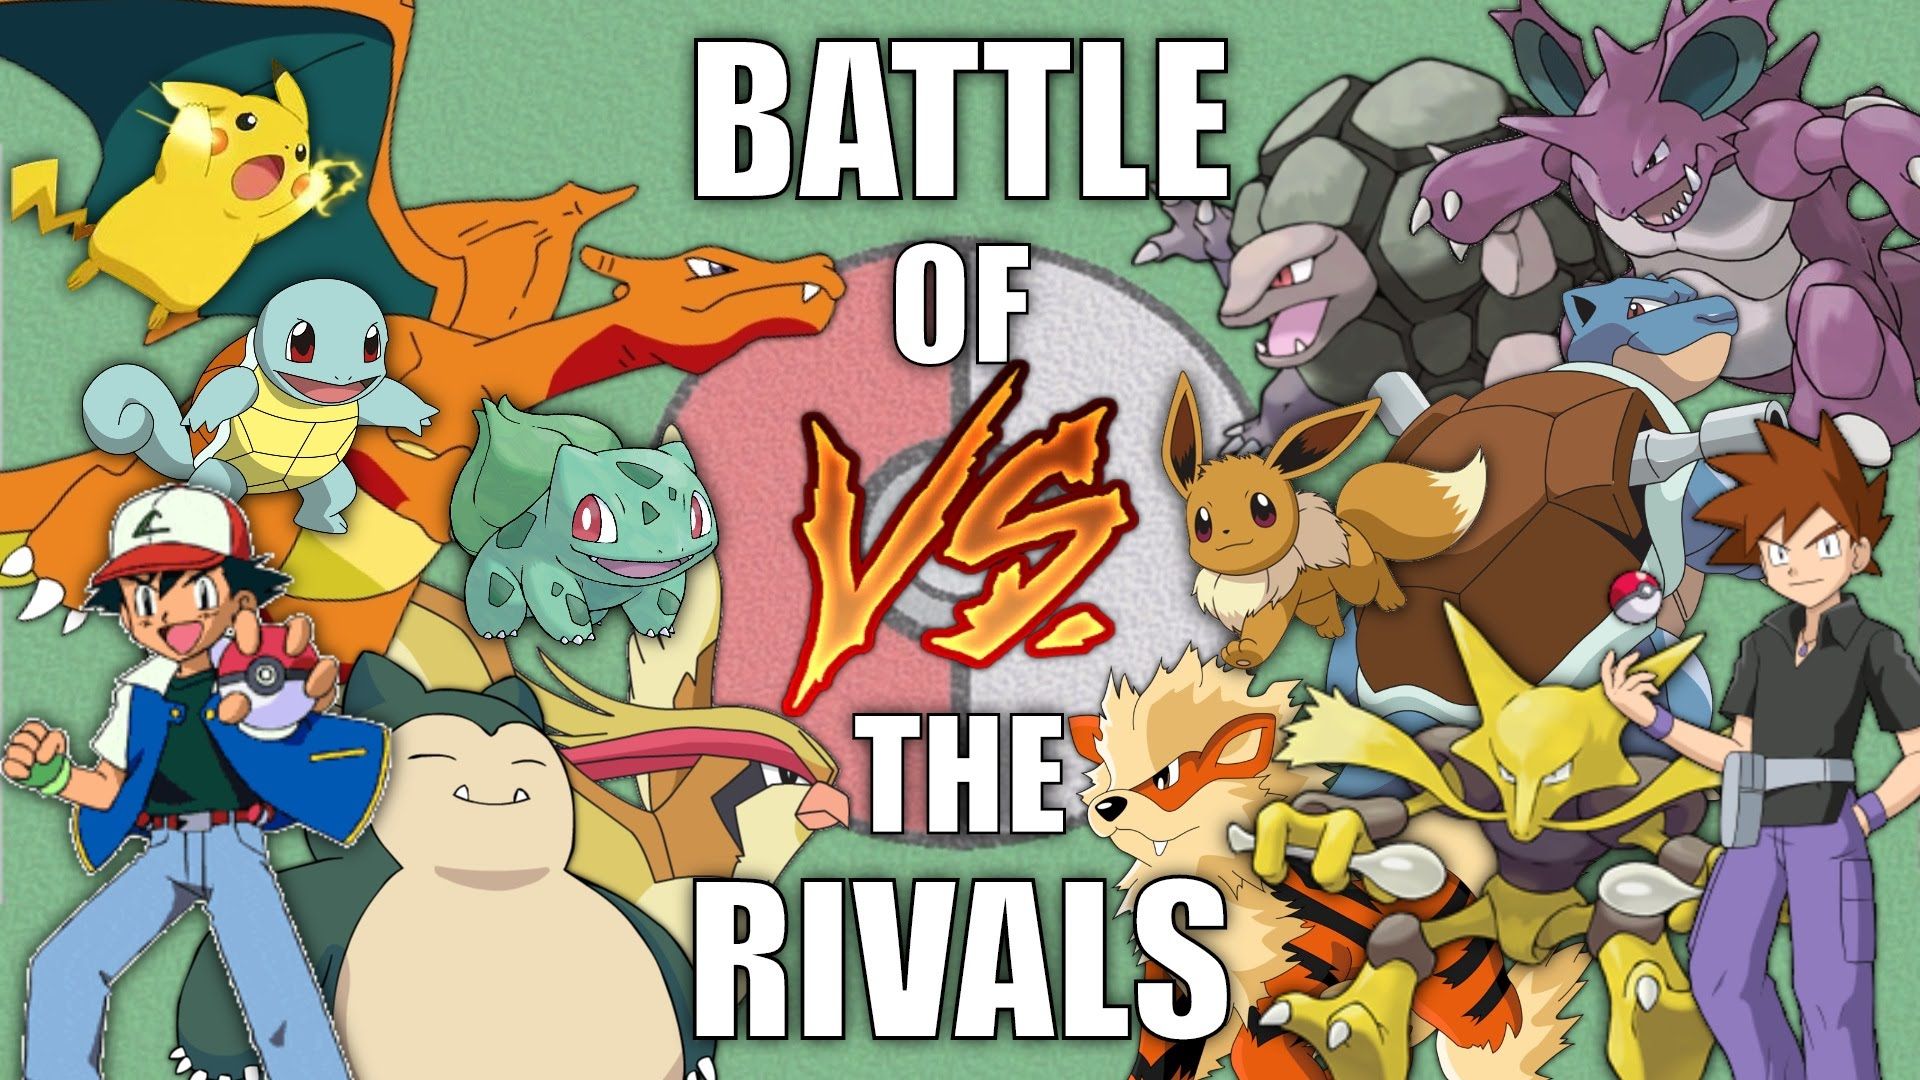 Pokemon Battle Revolution. Битва покемонов. Pokemon Rivals. Покемон битва из игры. Pokémon battle revolution